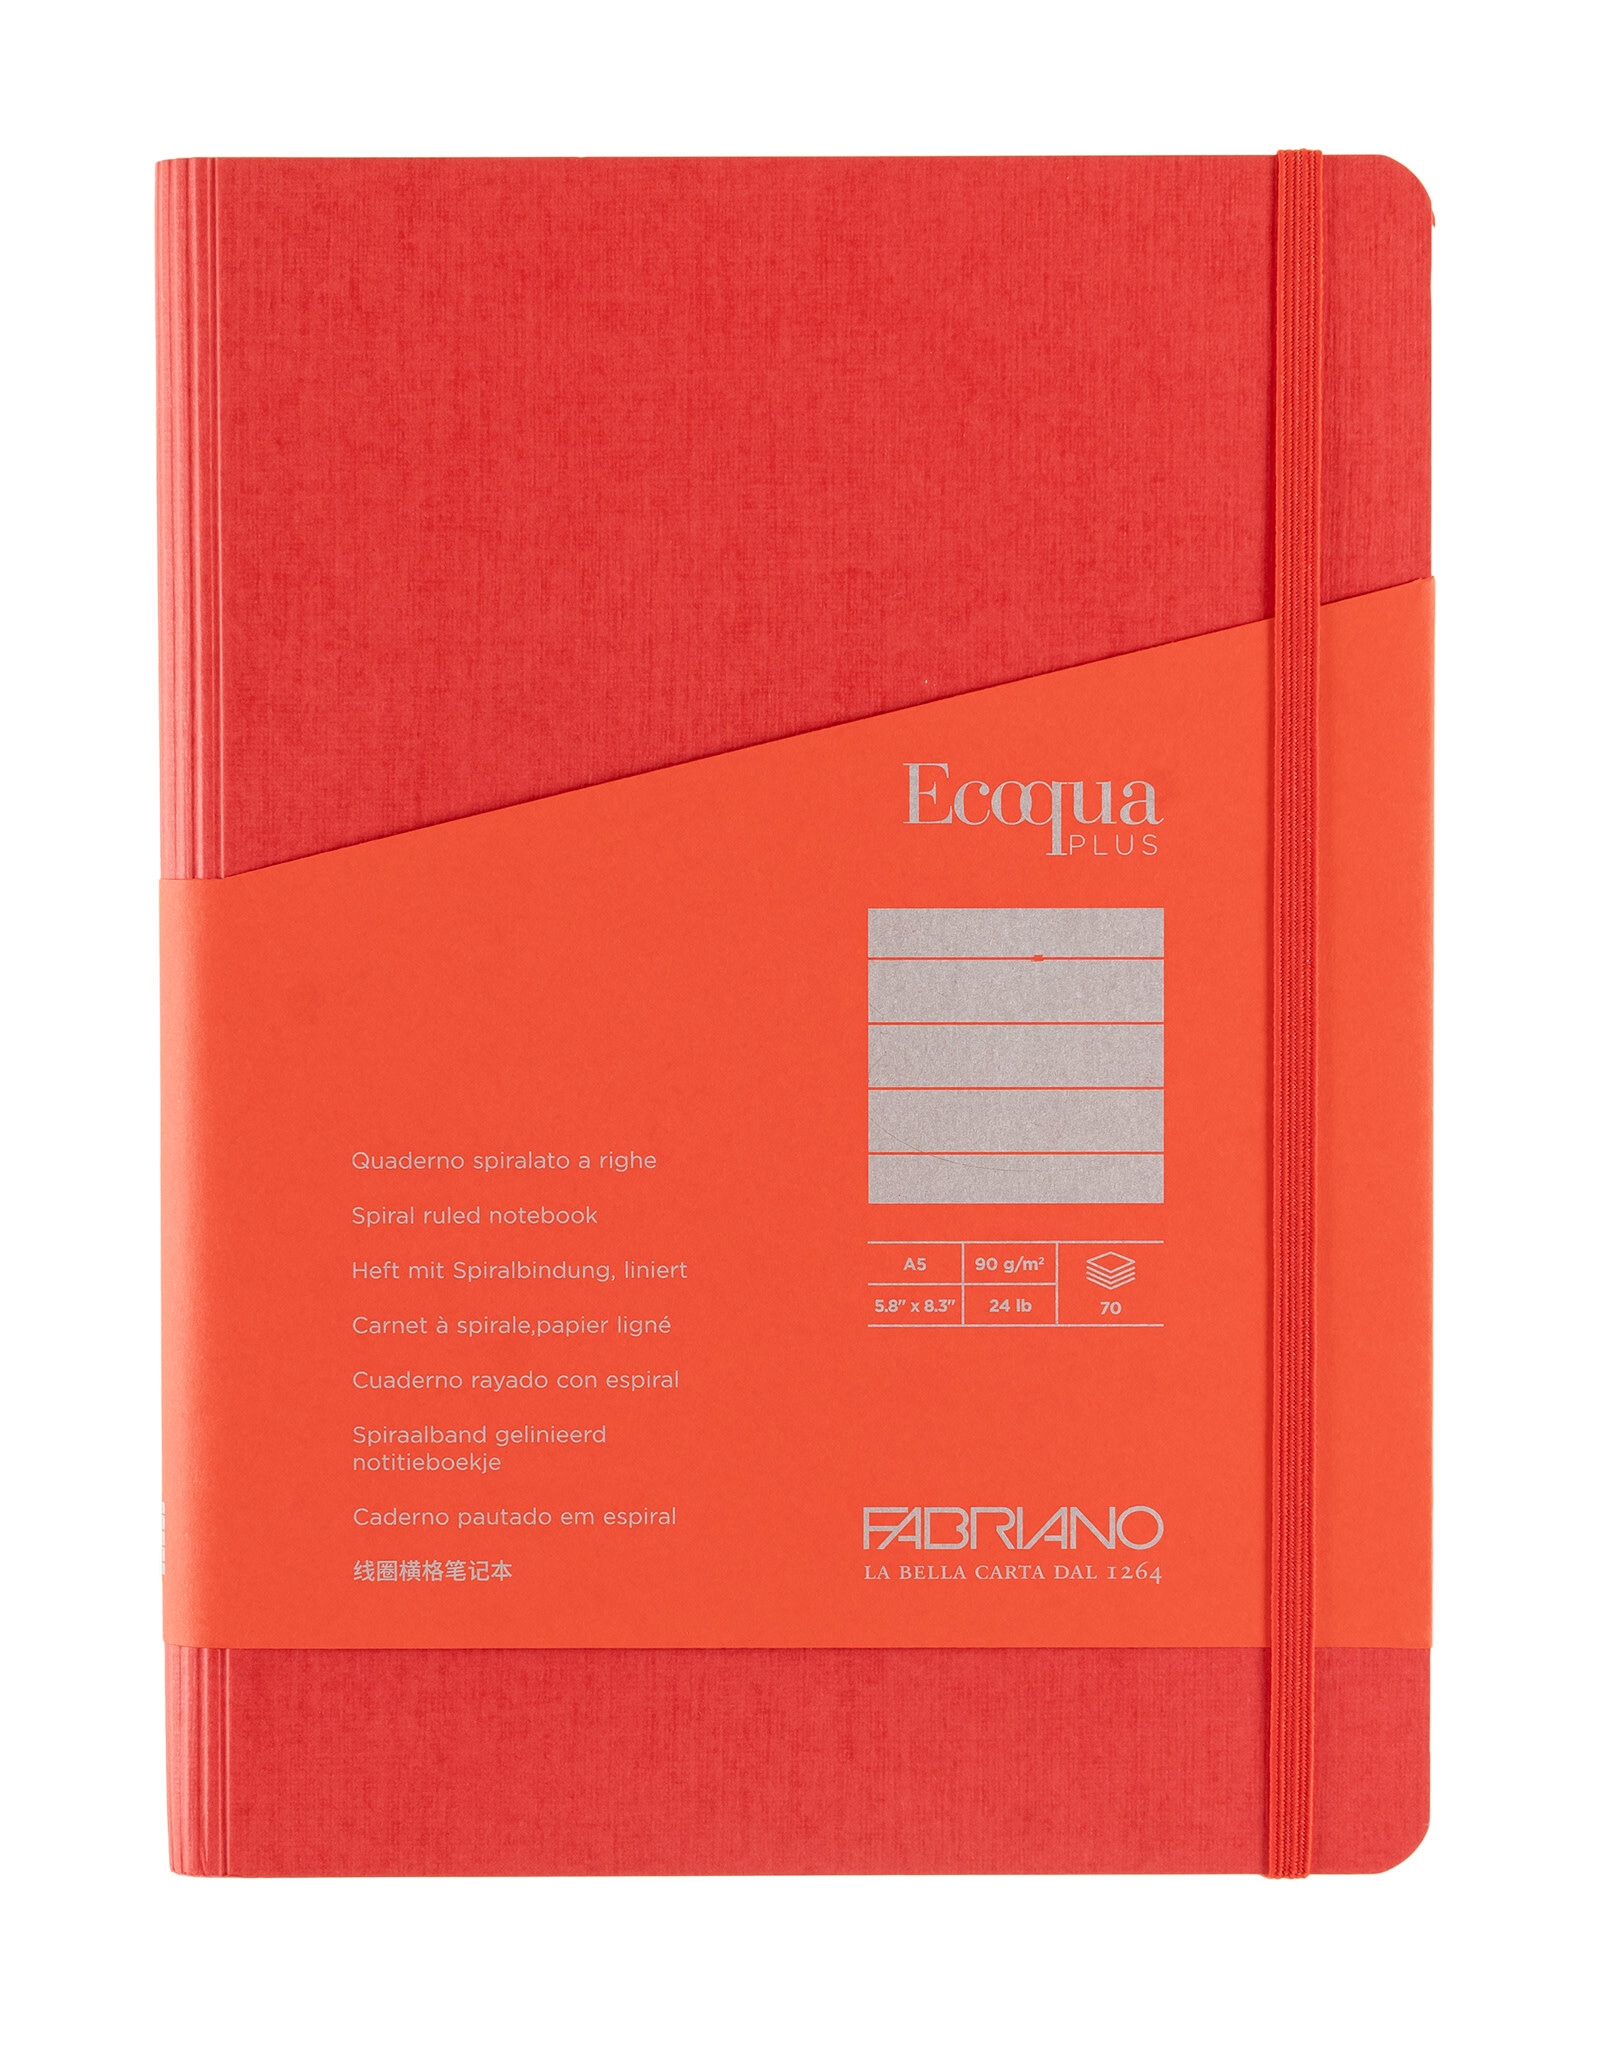 Ecoqua Plus Hidden Spiral Notebook, Red, A5, Ruled